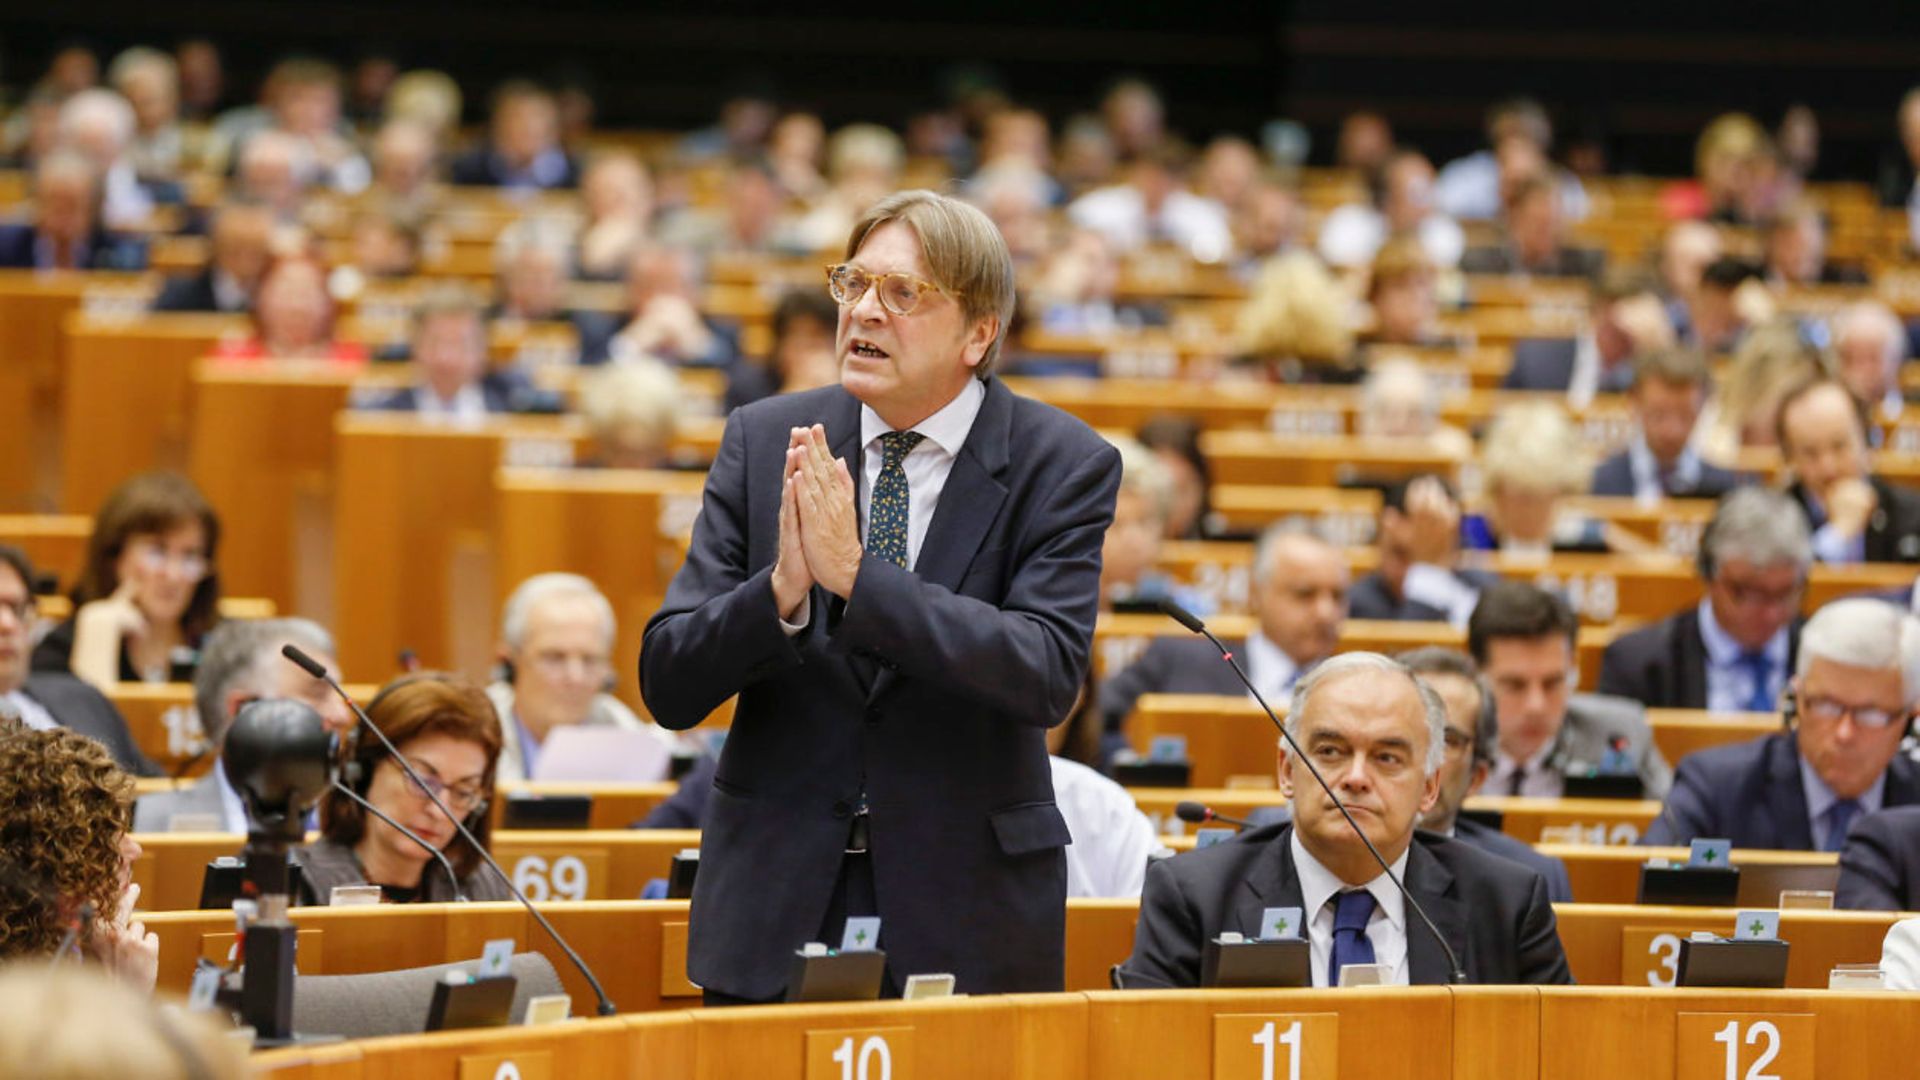 Guy Verhofstadt in the European Parliament - Credit: European Parliament